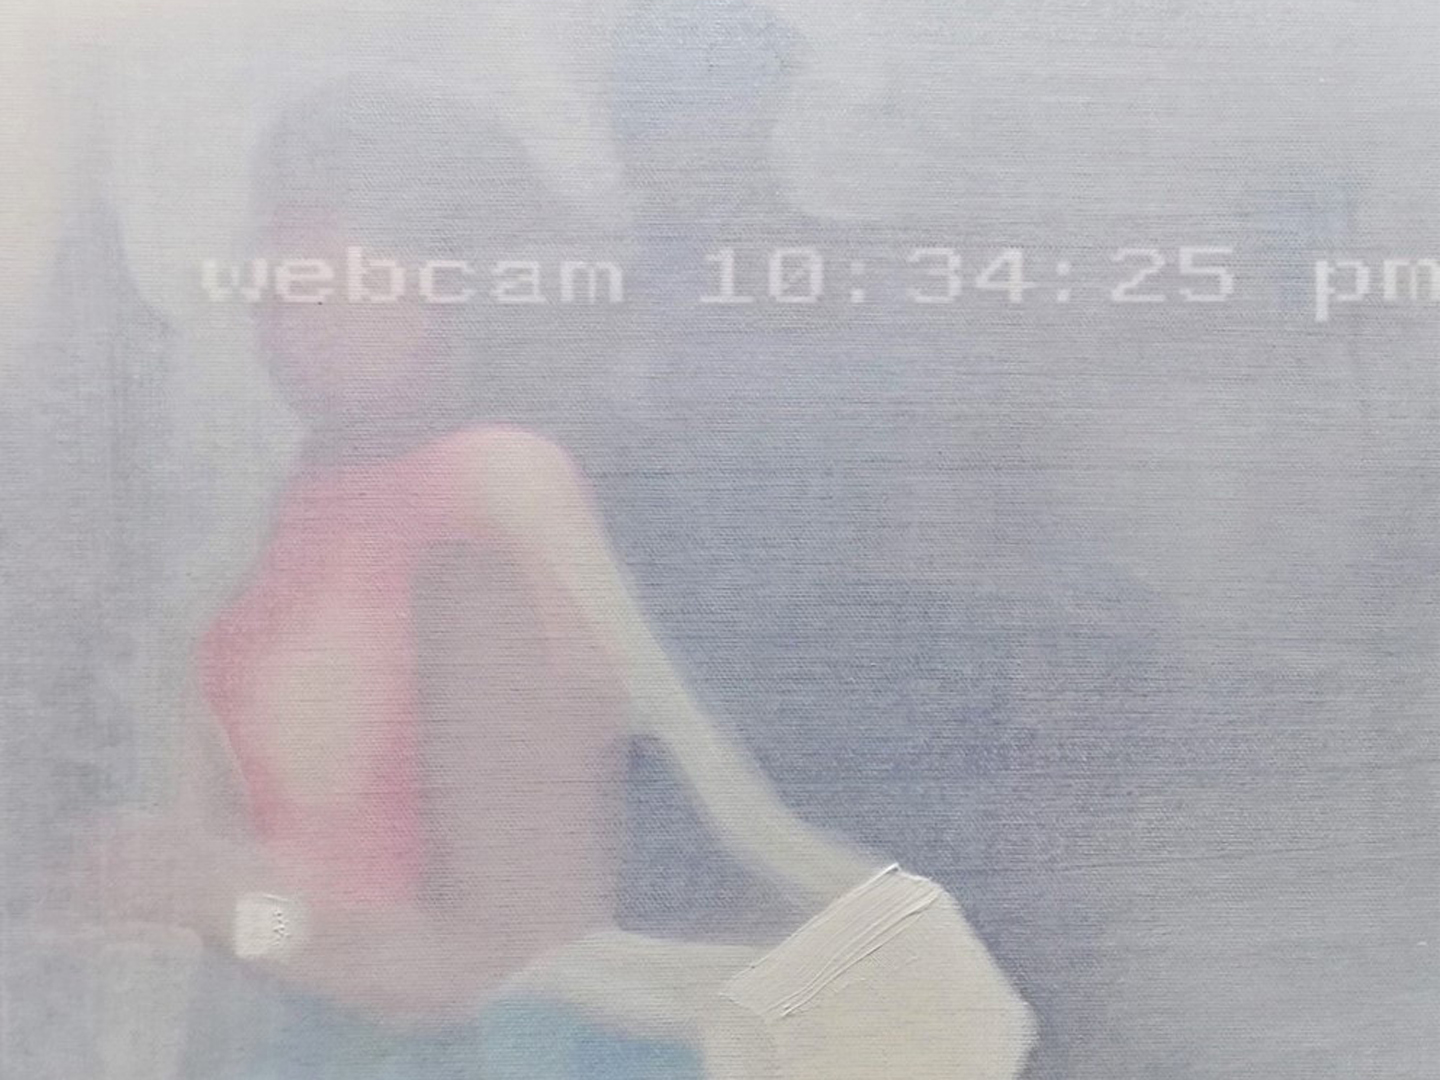 2015 cm webcam10 34 25 pm 31 cm x 23 cm opera su carta  